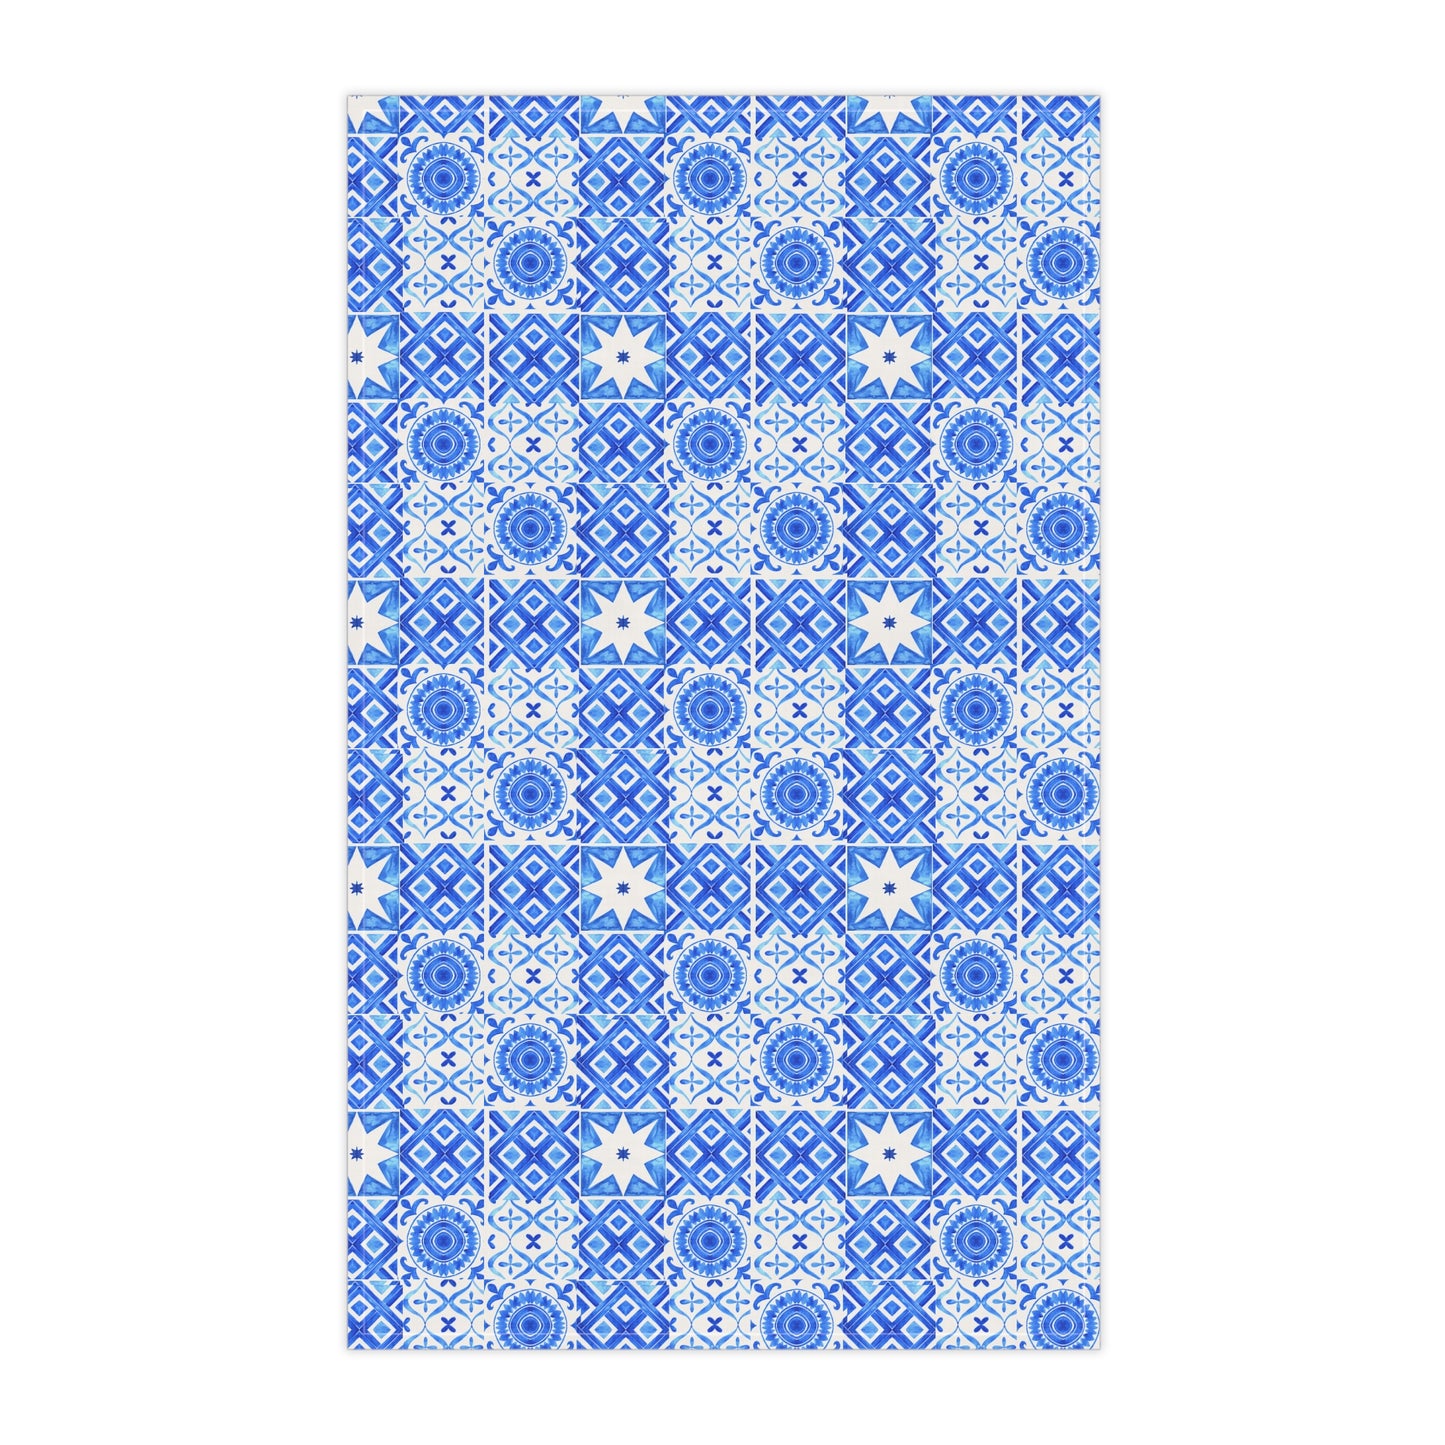 Moroccan Cobalt Blue and White Star Pattern Cement Tile Decorative Kitchen Tea Towel/Bar Towel